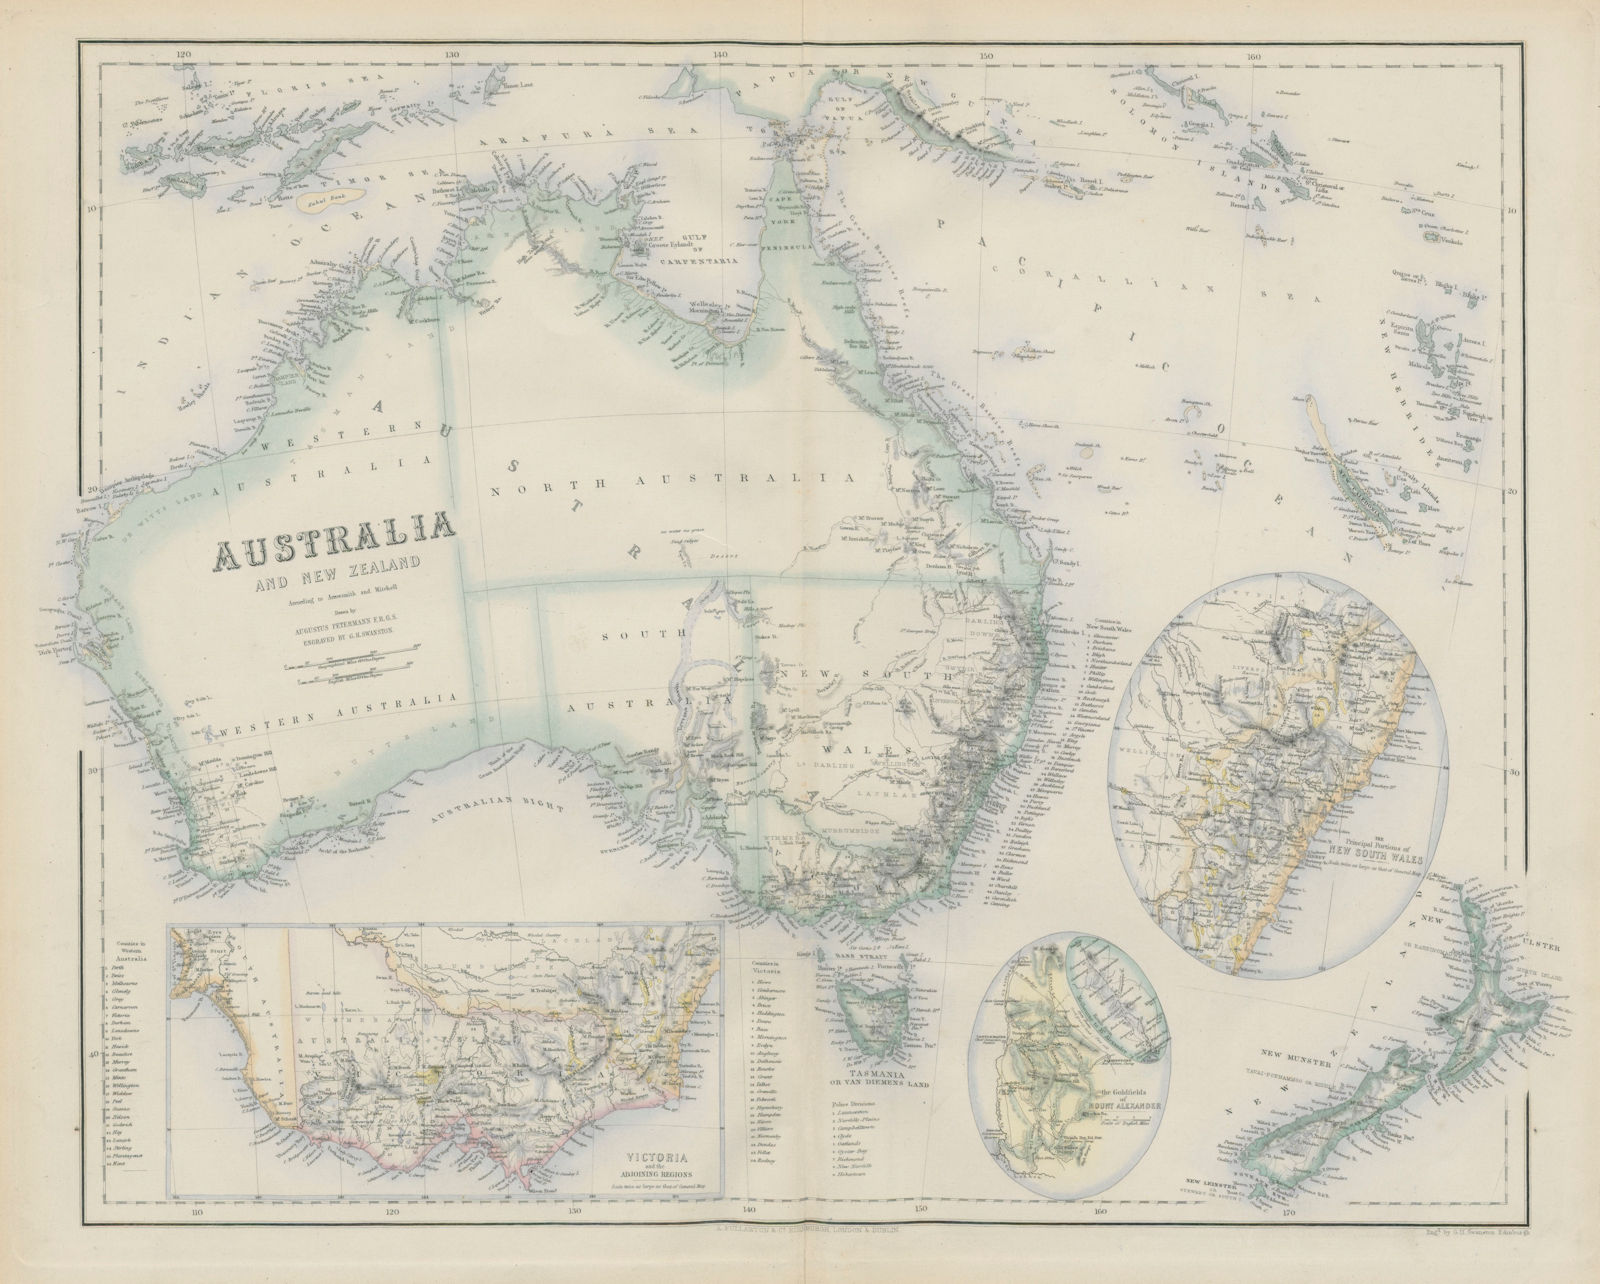 Australia & New Zealand. Victoria. Mount Alexander goldfields. SWANSTON 1860 map